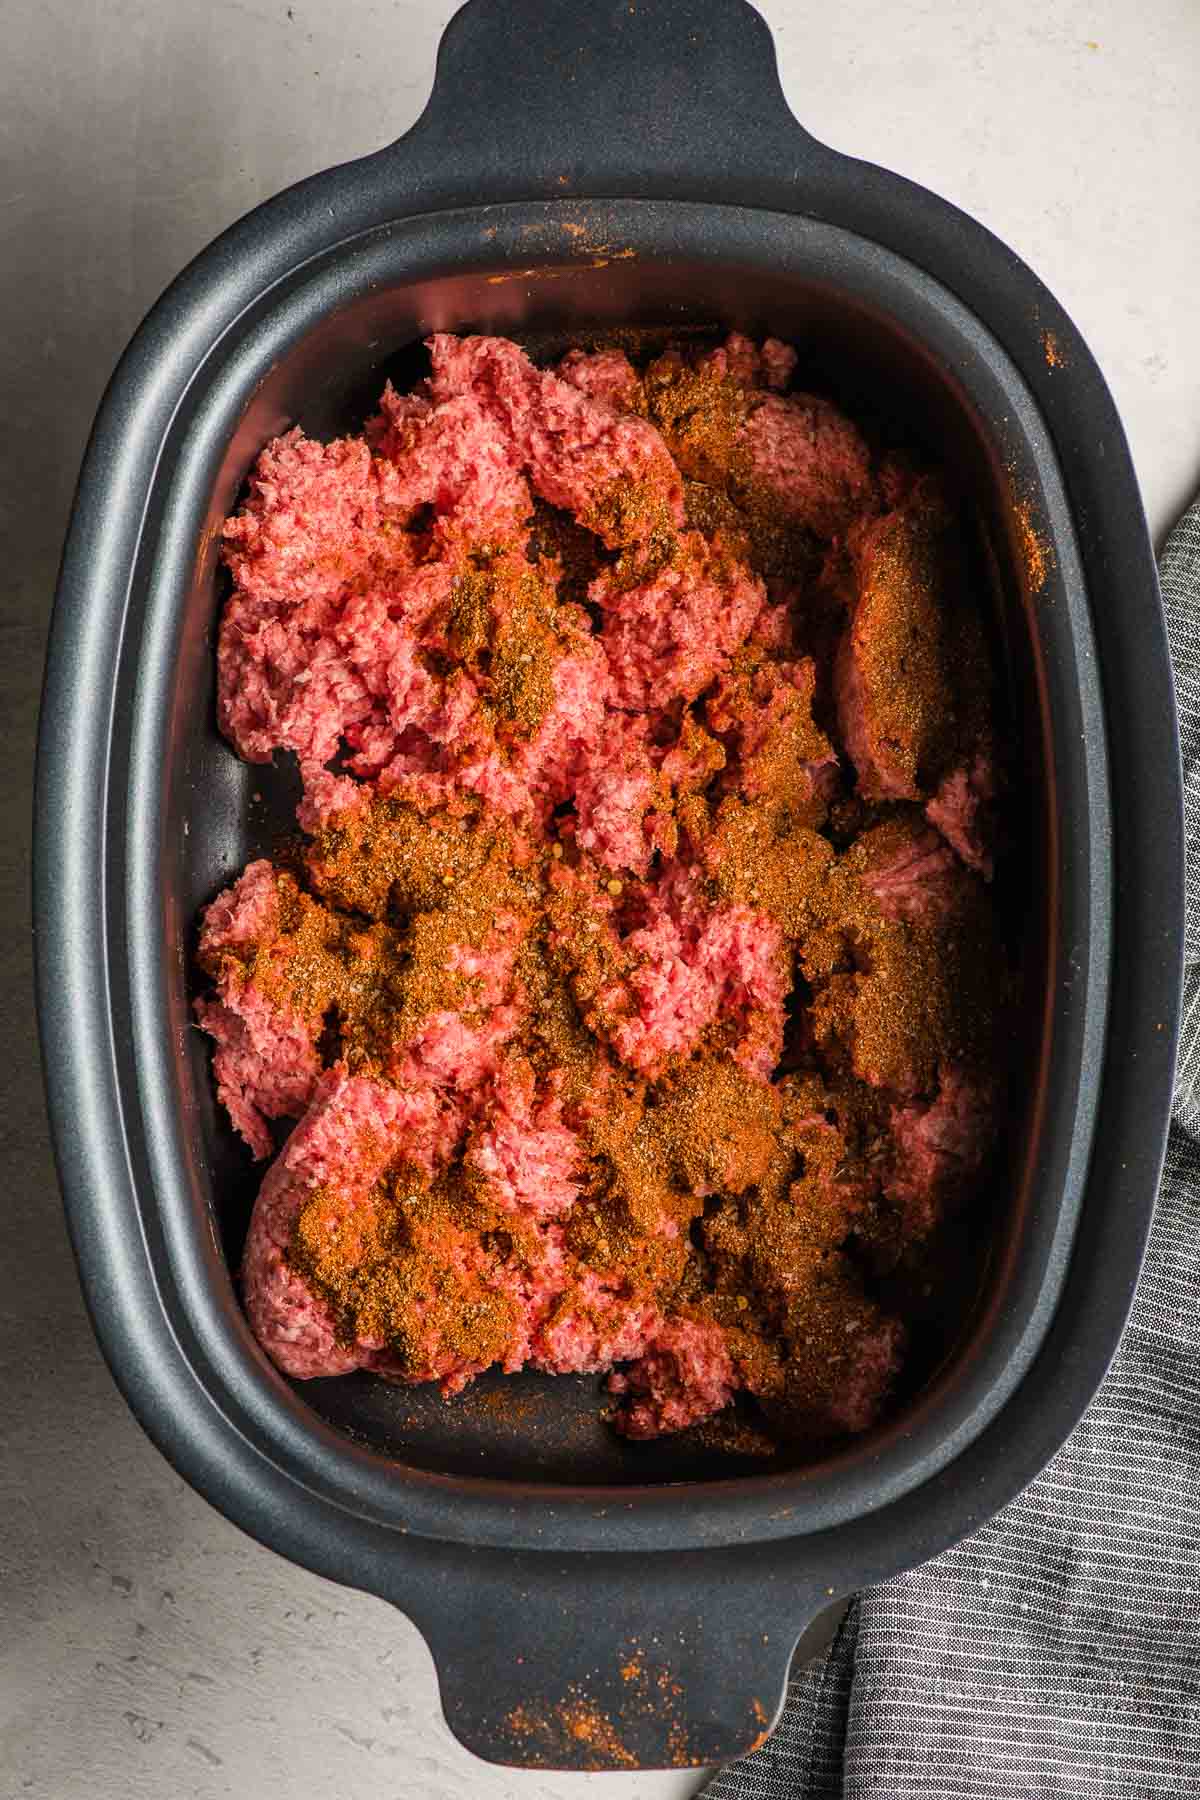 Seasoned ground beef in the crock pot.